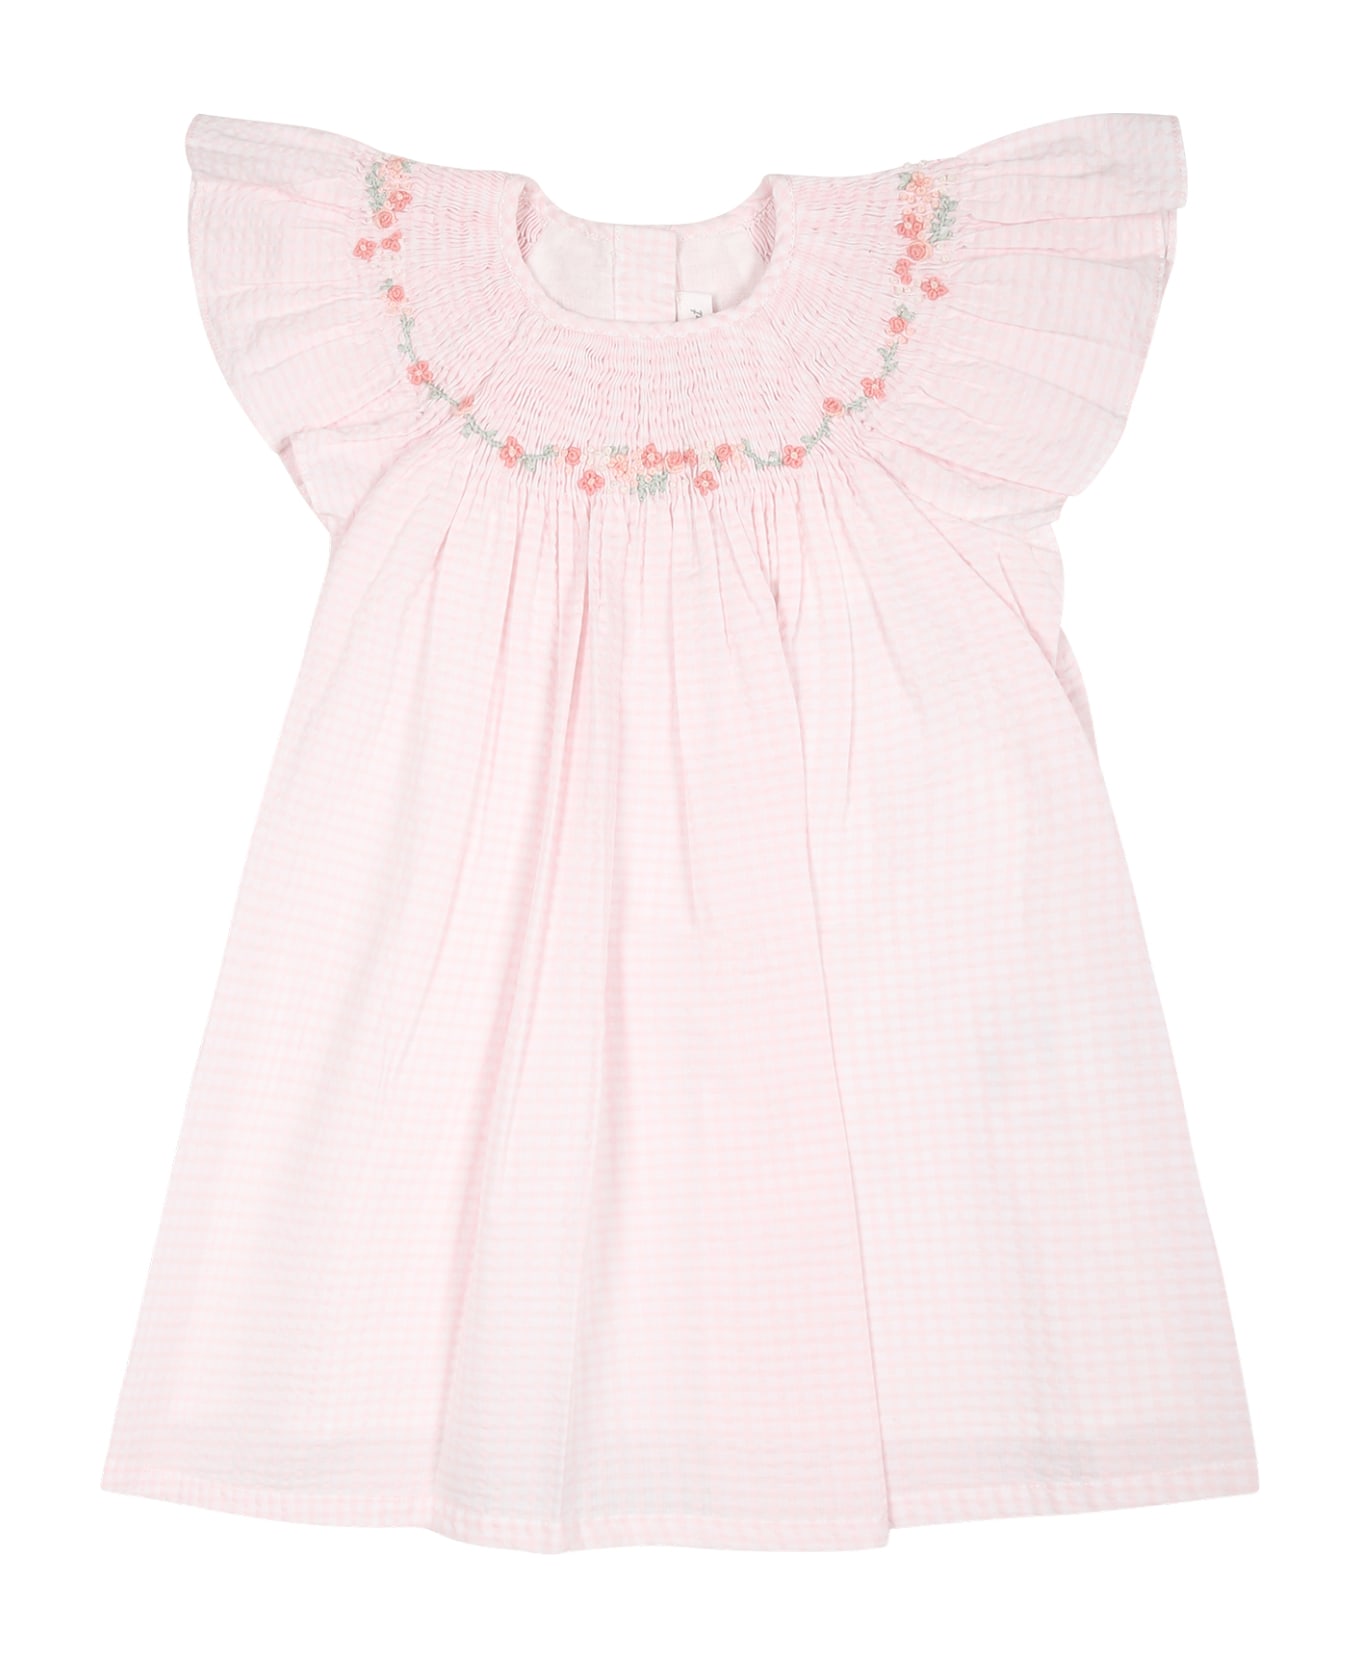 Tartine et Chocolat Pink Casual Dress For Baby Girl - Pink ウェア